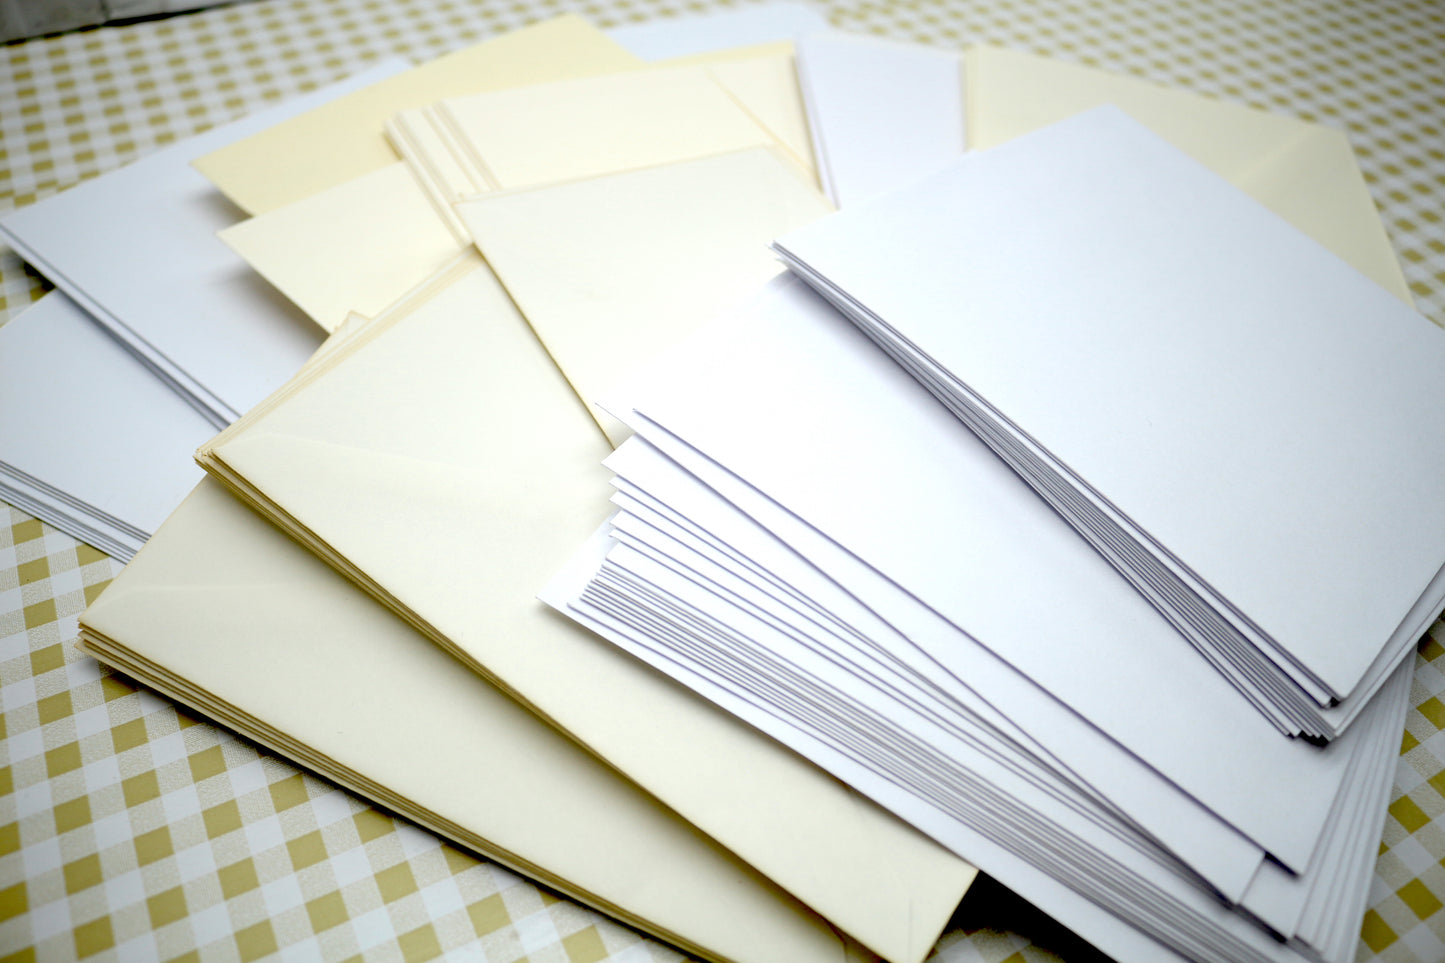 1 pound White Envelopes Variety of Sizes, Money Envelopes, Scrapbooking, Junk Journal Supplies